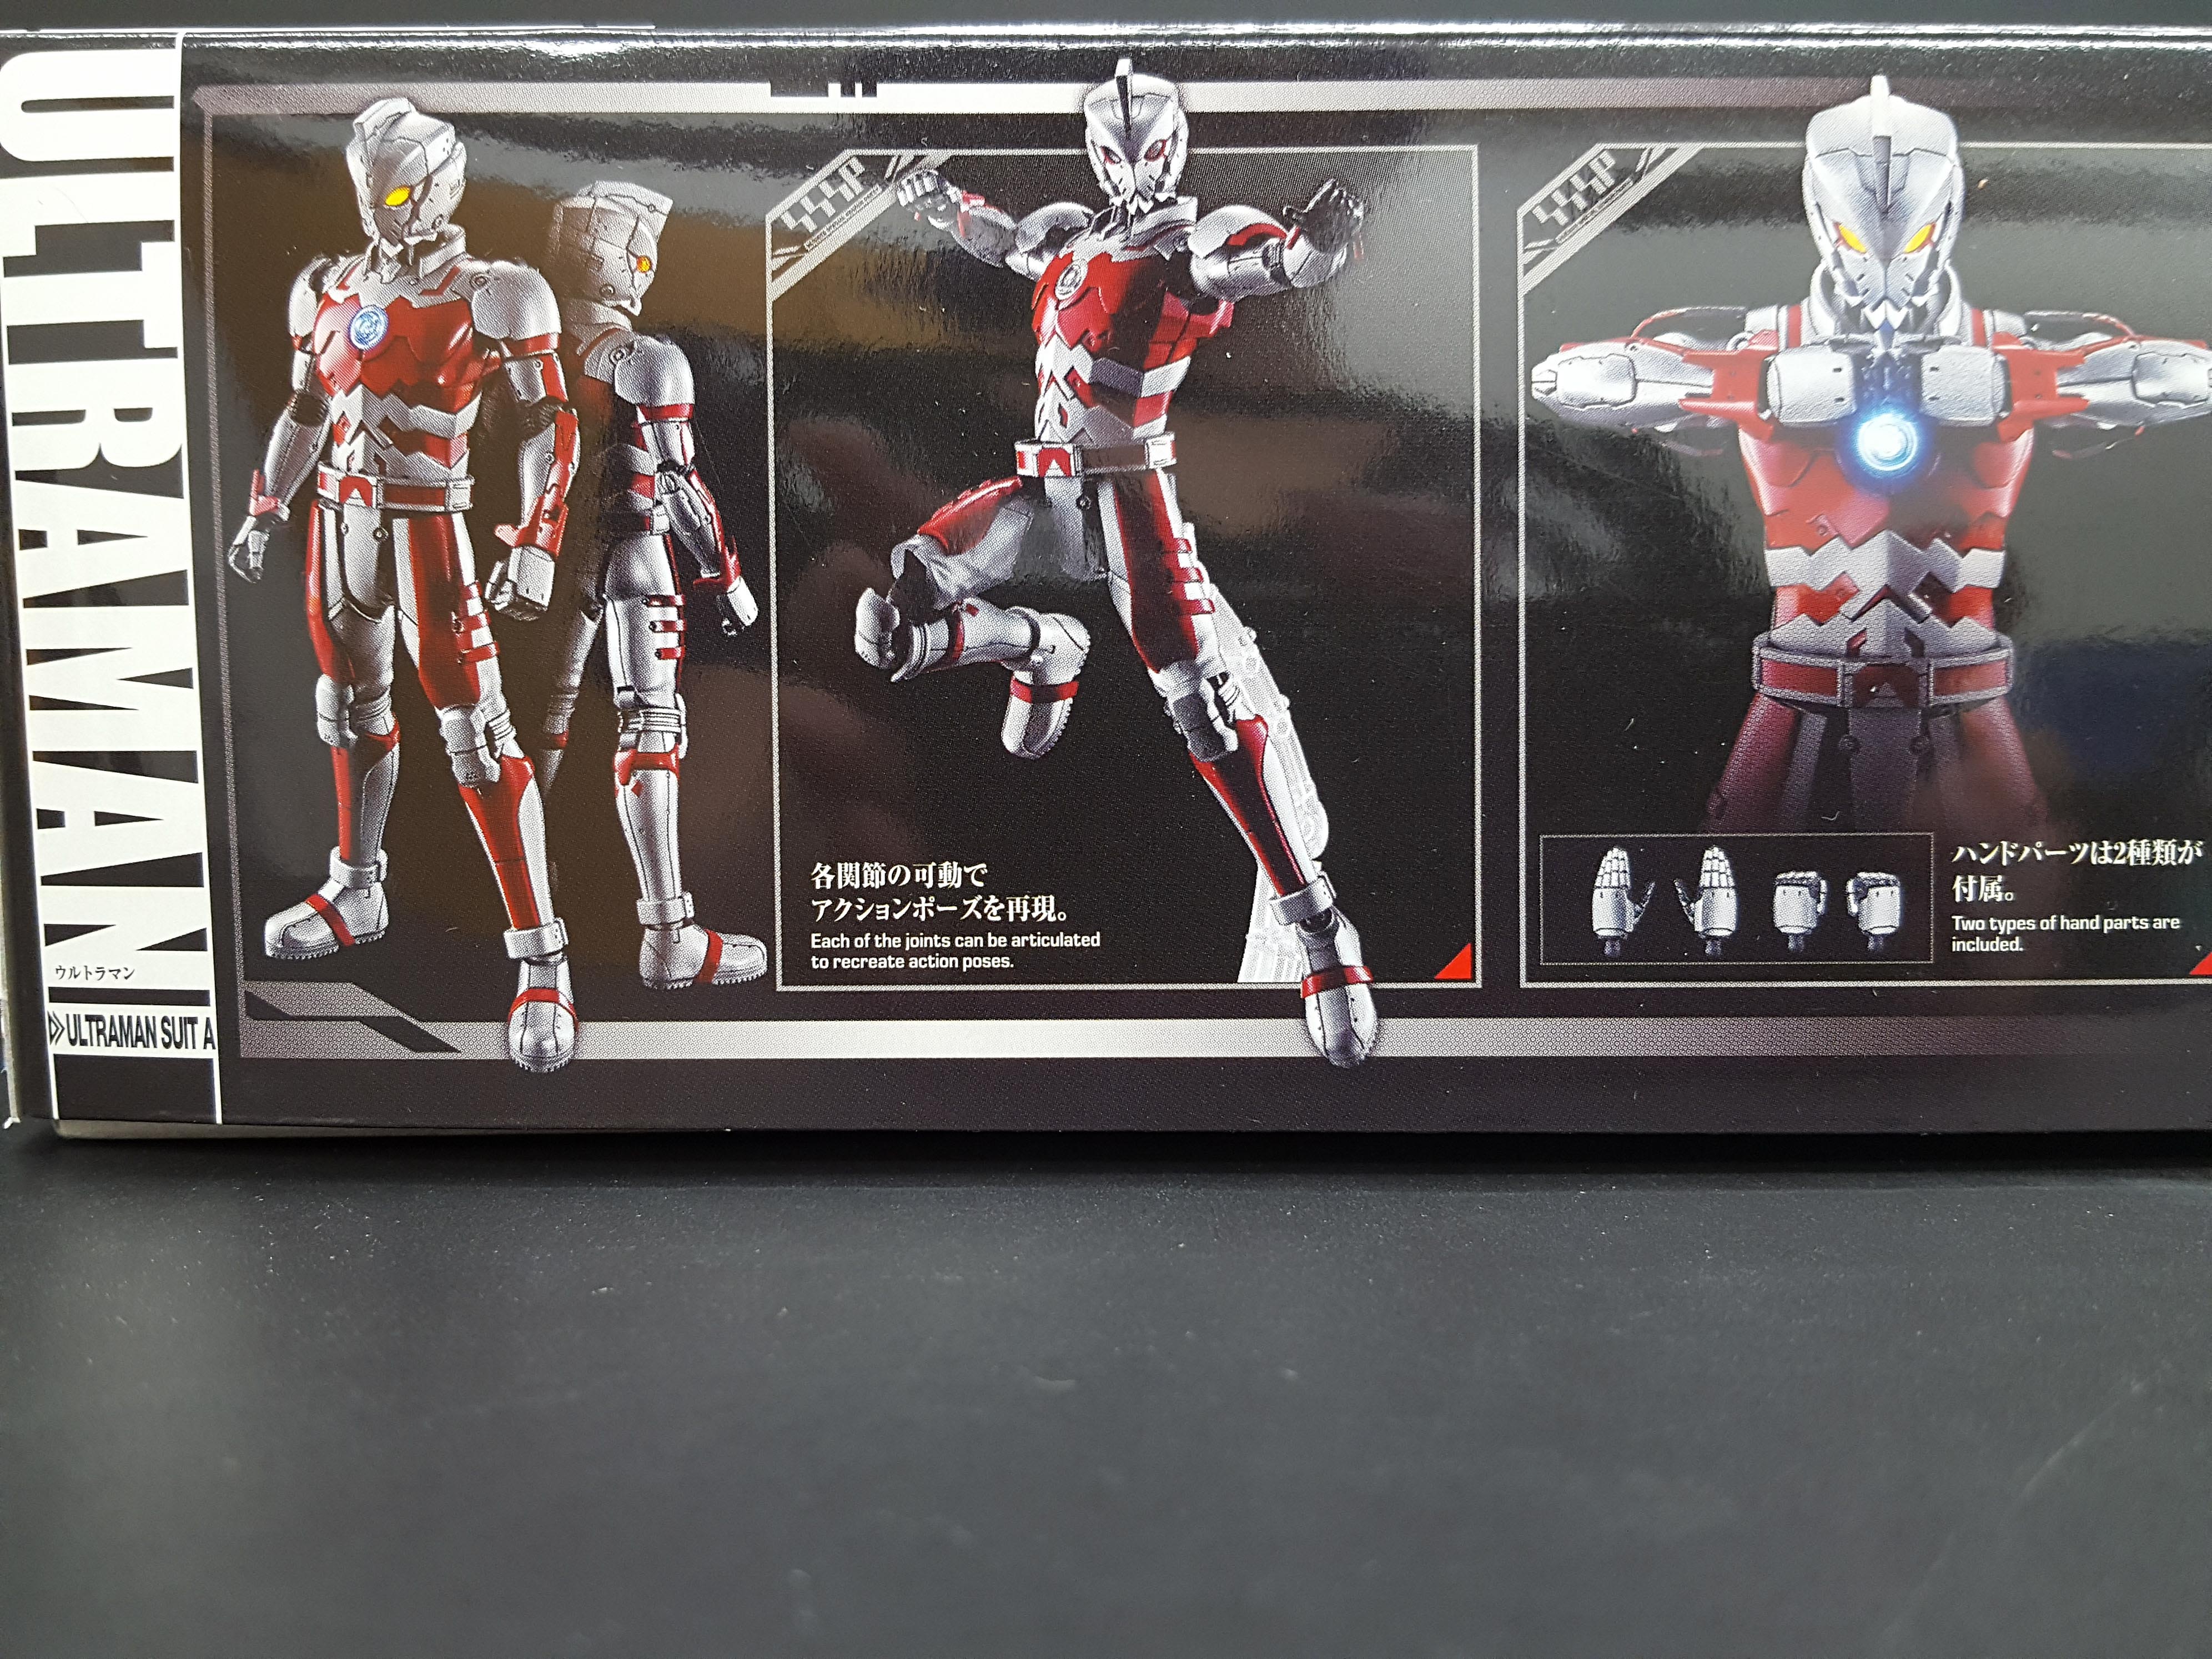 1/12 Figure-rise Standard Ultraman Suit A